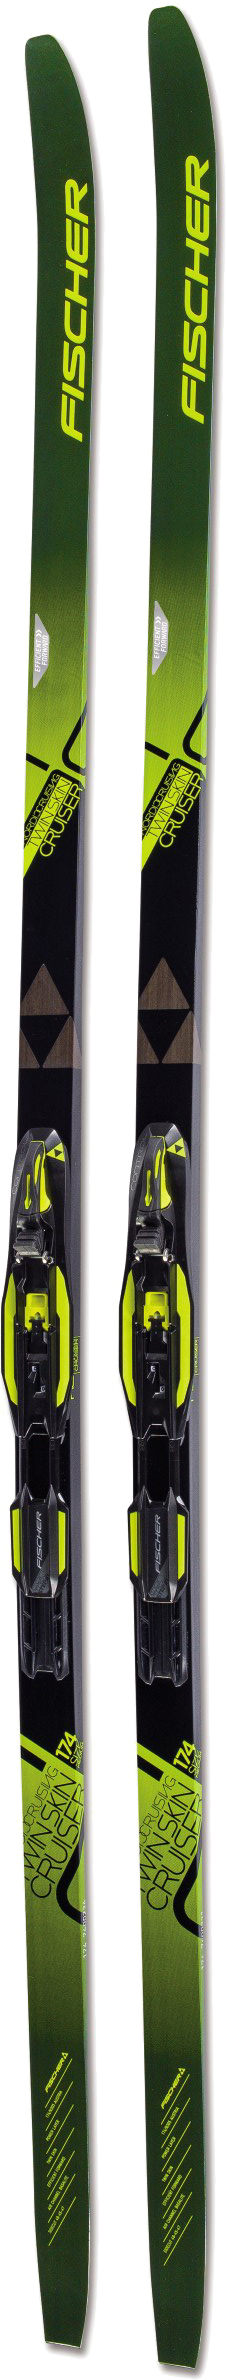 Беговые лыжи Fischer Twin Skin Cruiser EF IFP 174 см